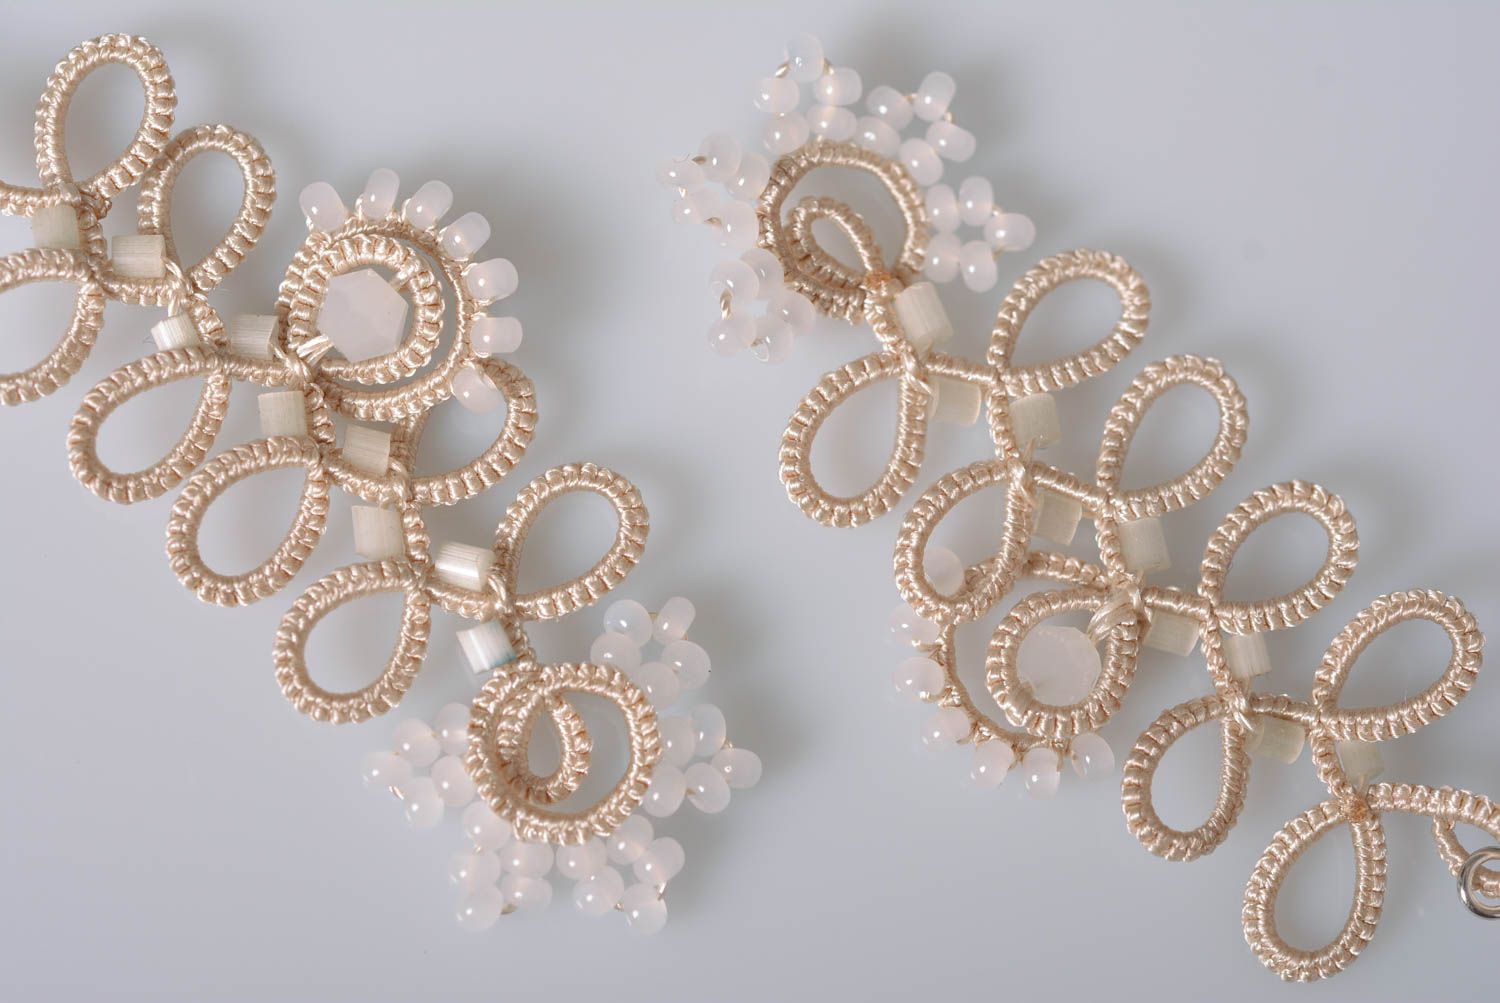 Handmade earrings designer jewelry fashion accessories dangling earrings photo 2